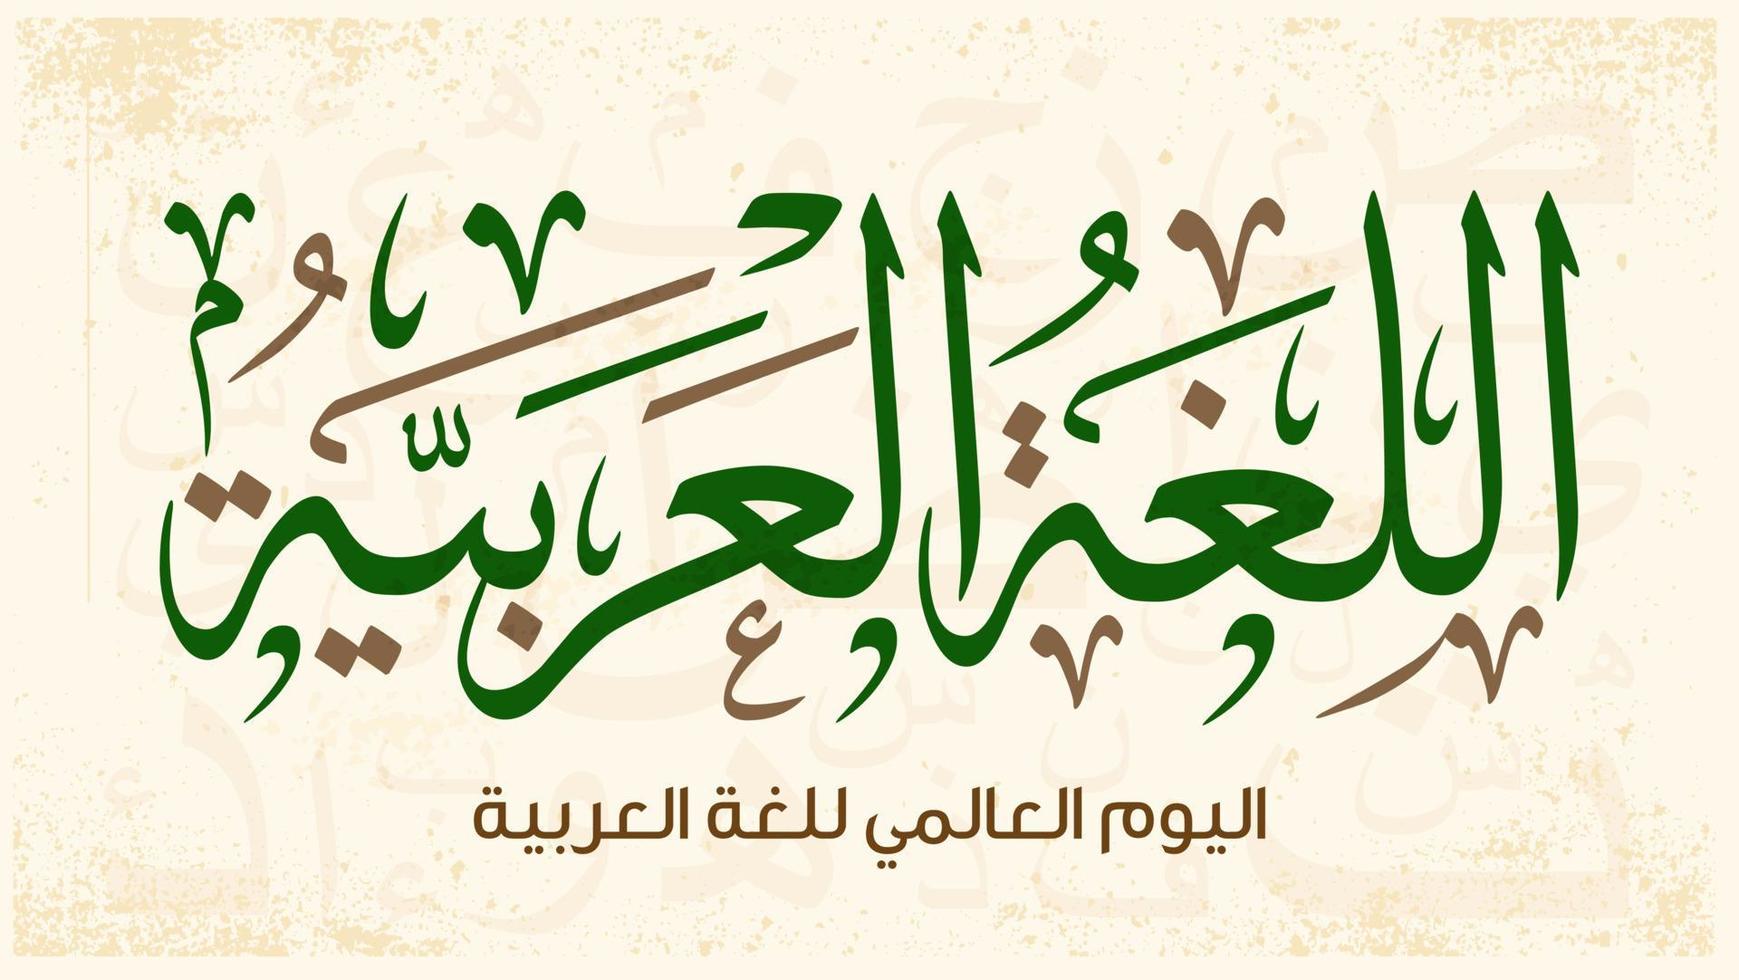 International Arabic Language Day Arabic Calligraphy Design. 18th of December day of Arabic Language in the world. Arabic Language day greeting in Arabic language. vector